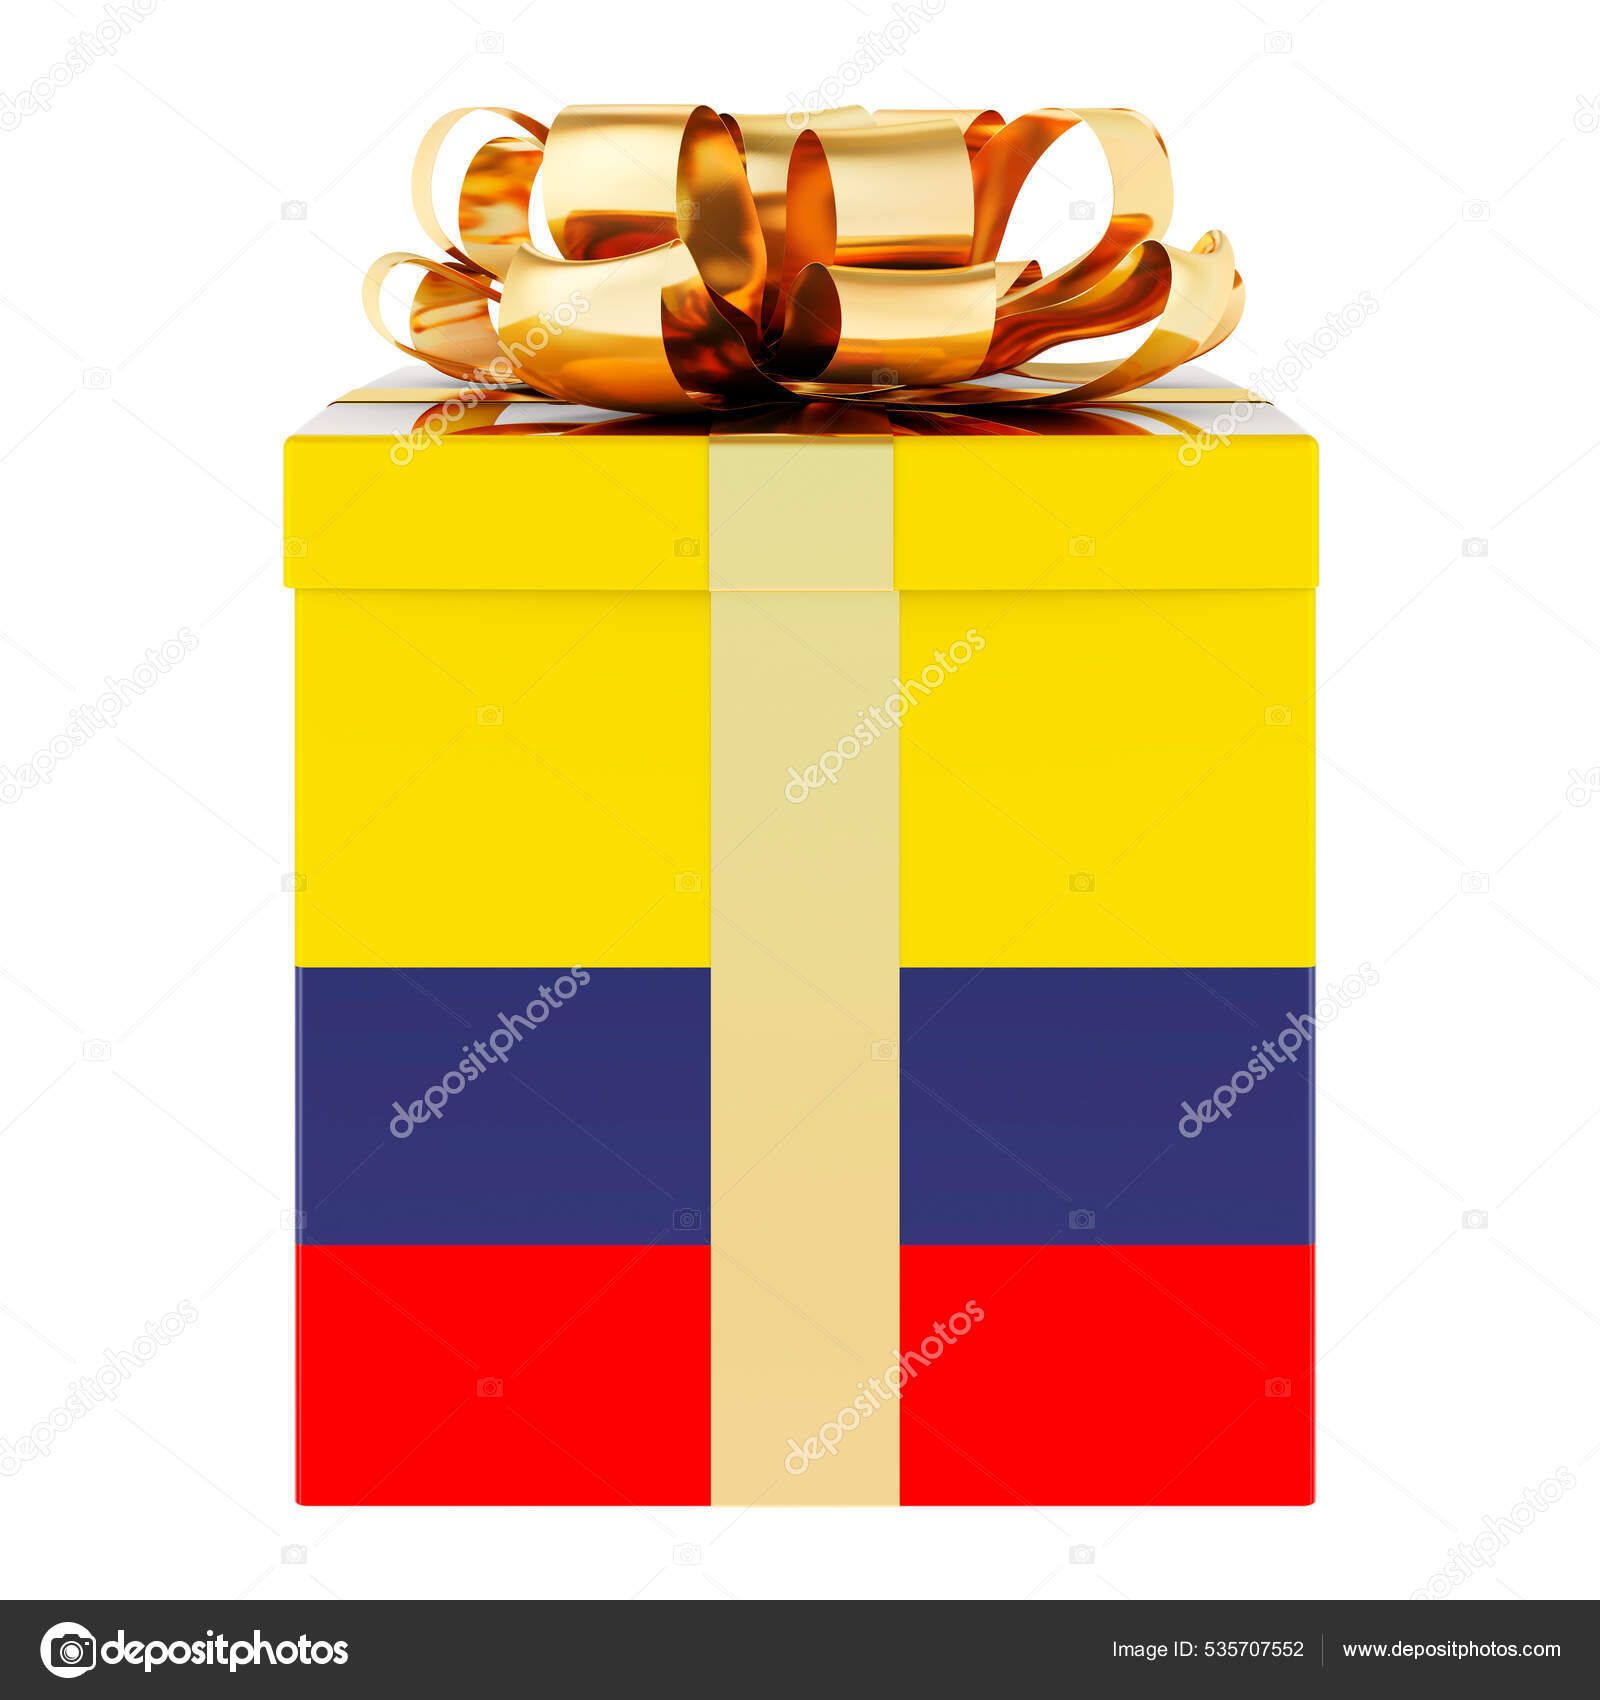 depositphotos_535707552-stock-photo-gift-box-colombian-flag-holiday.jpg